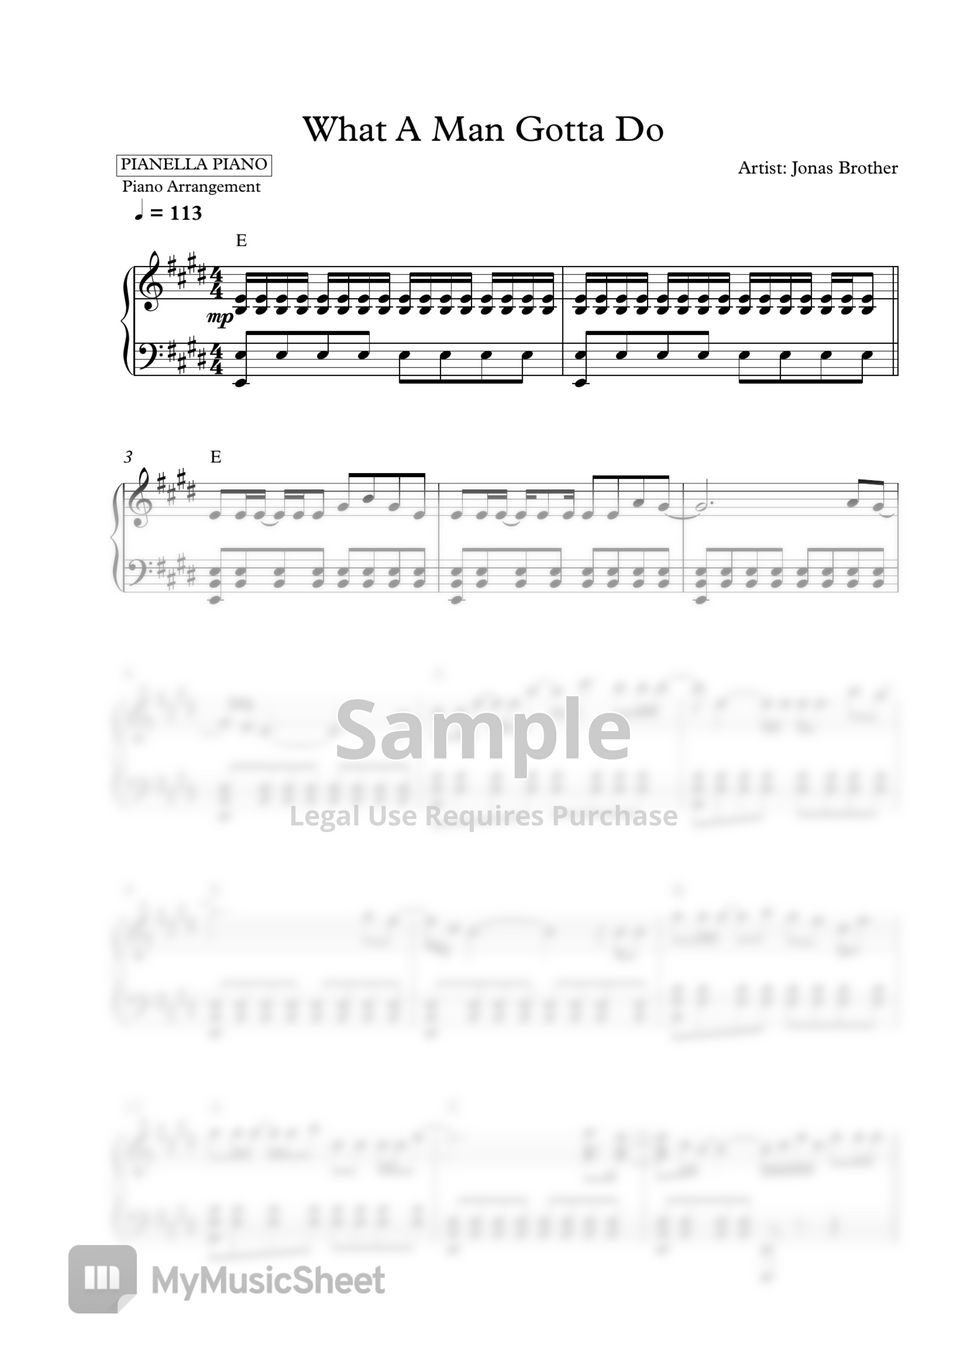 Jonas Brothers - What A Man Gotta Do (Piano Sheet) by Pianella Piano